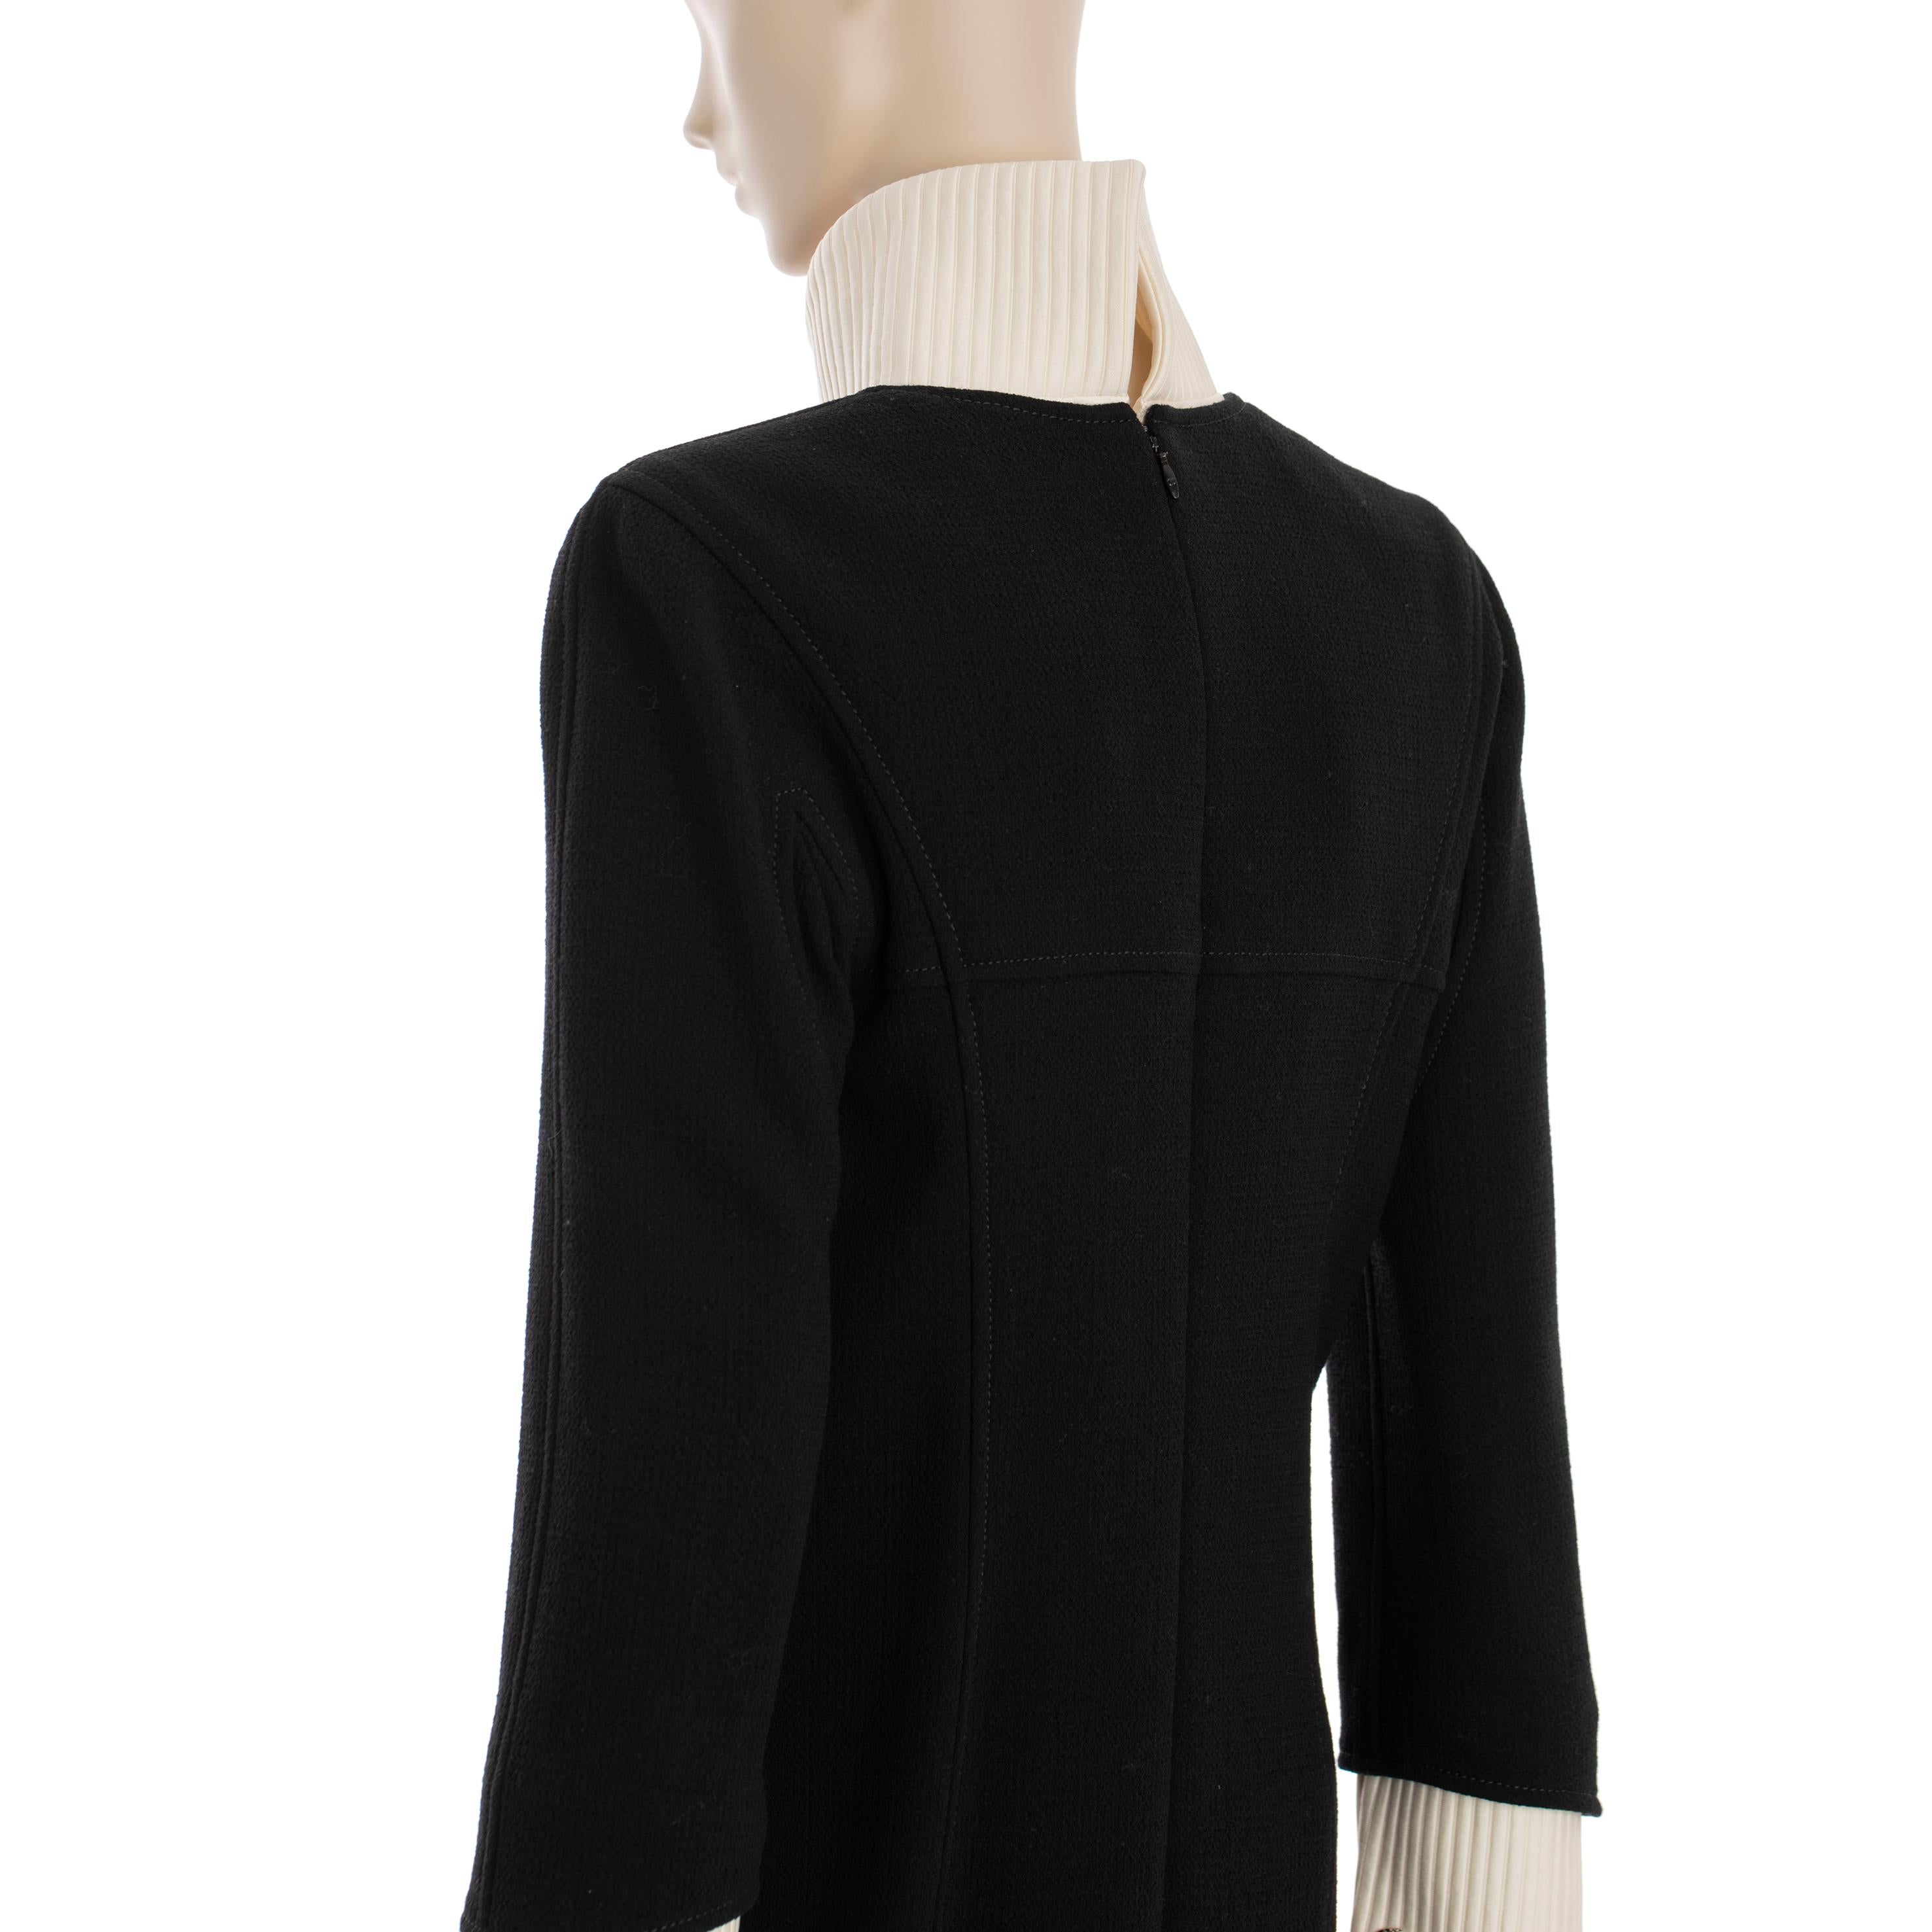 Chanel Long Black Dress With Detachable Collar & Cuff 40 FR 9